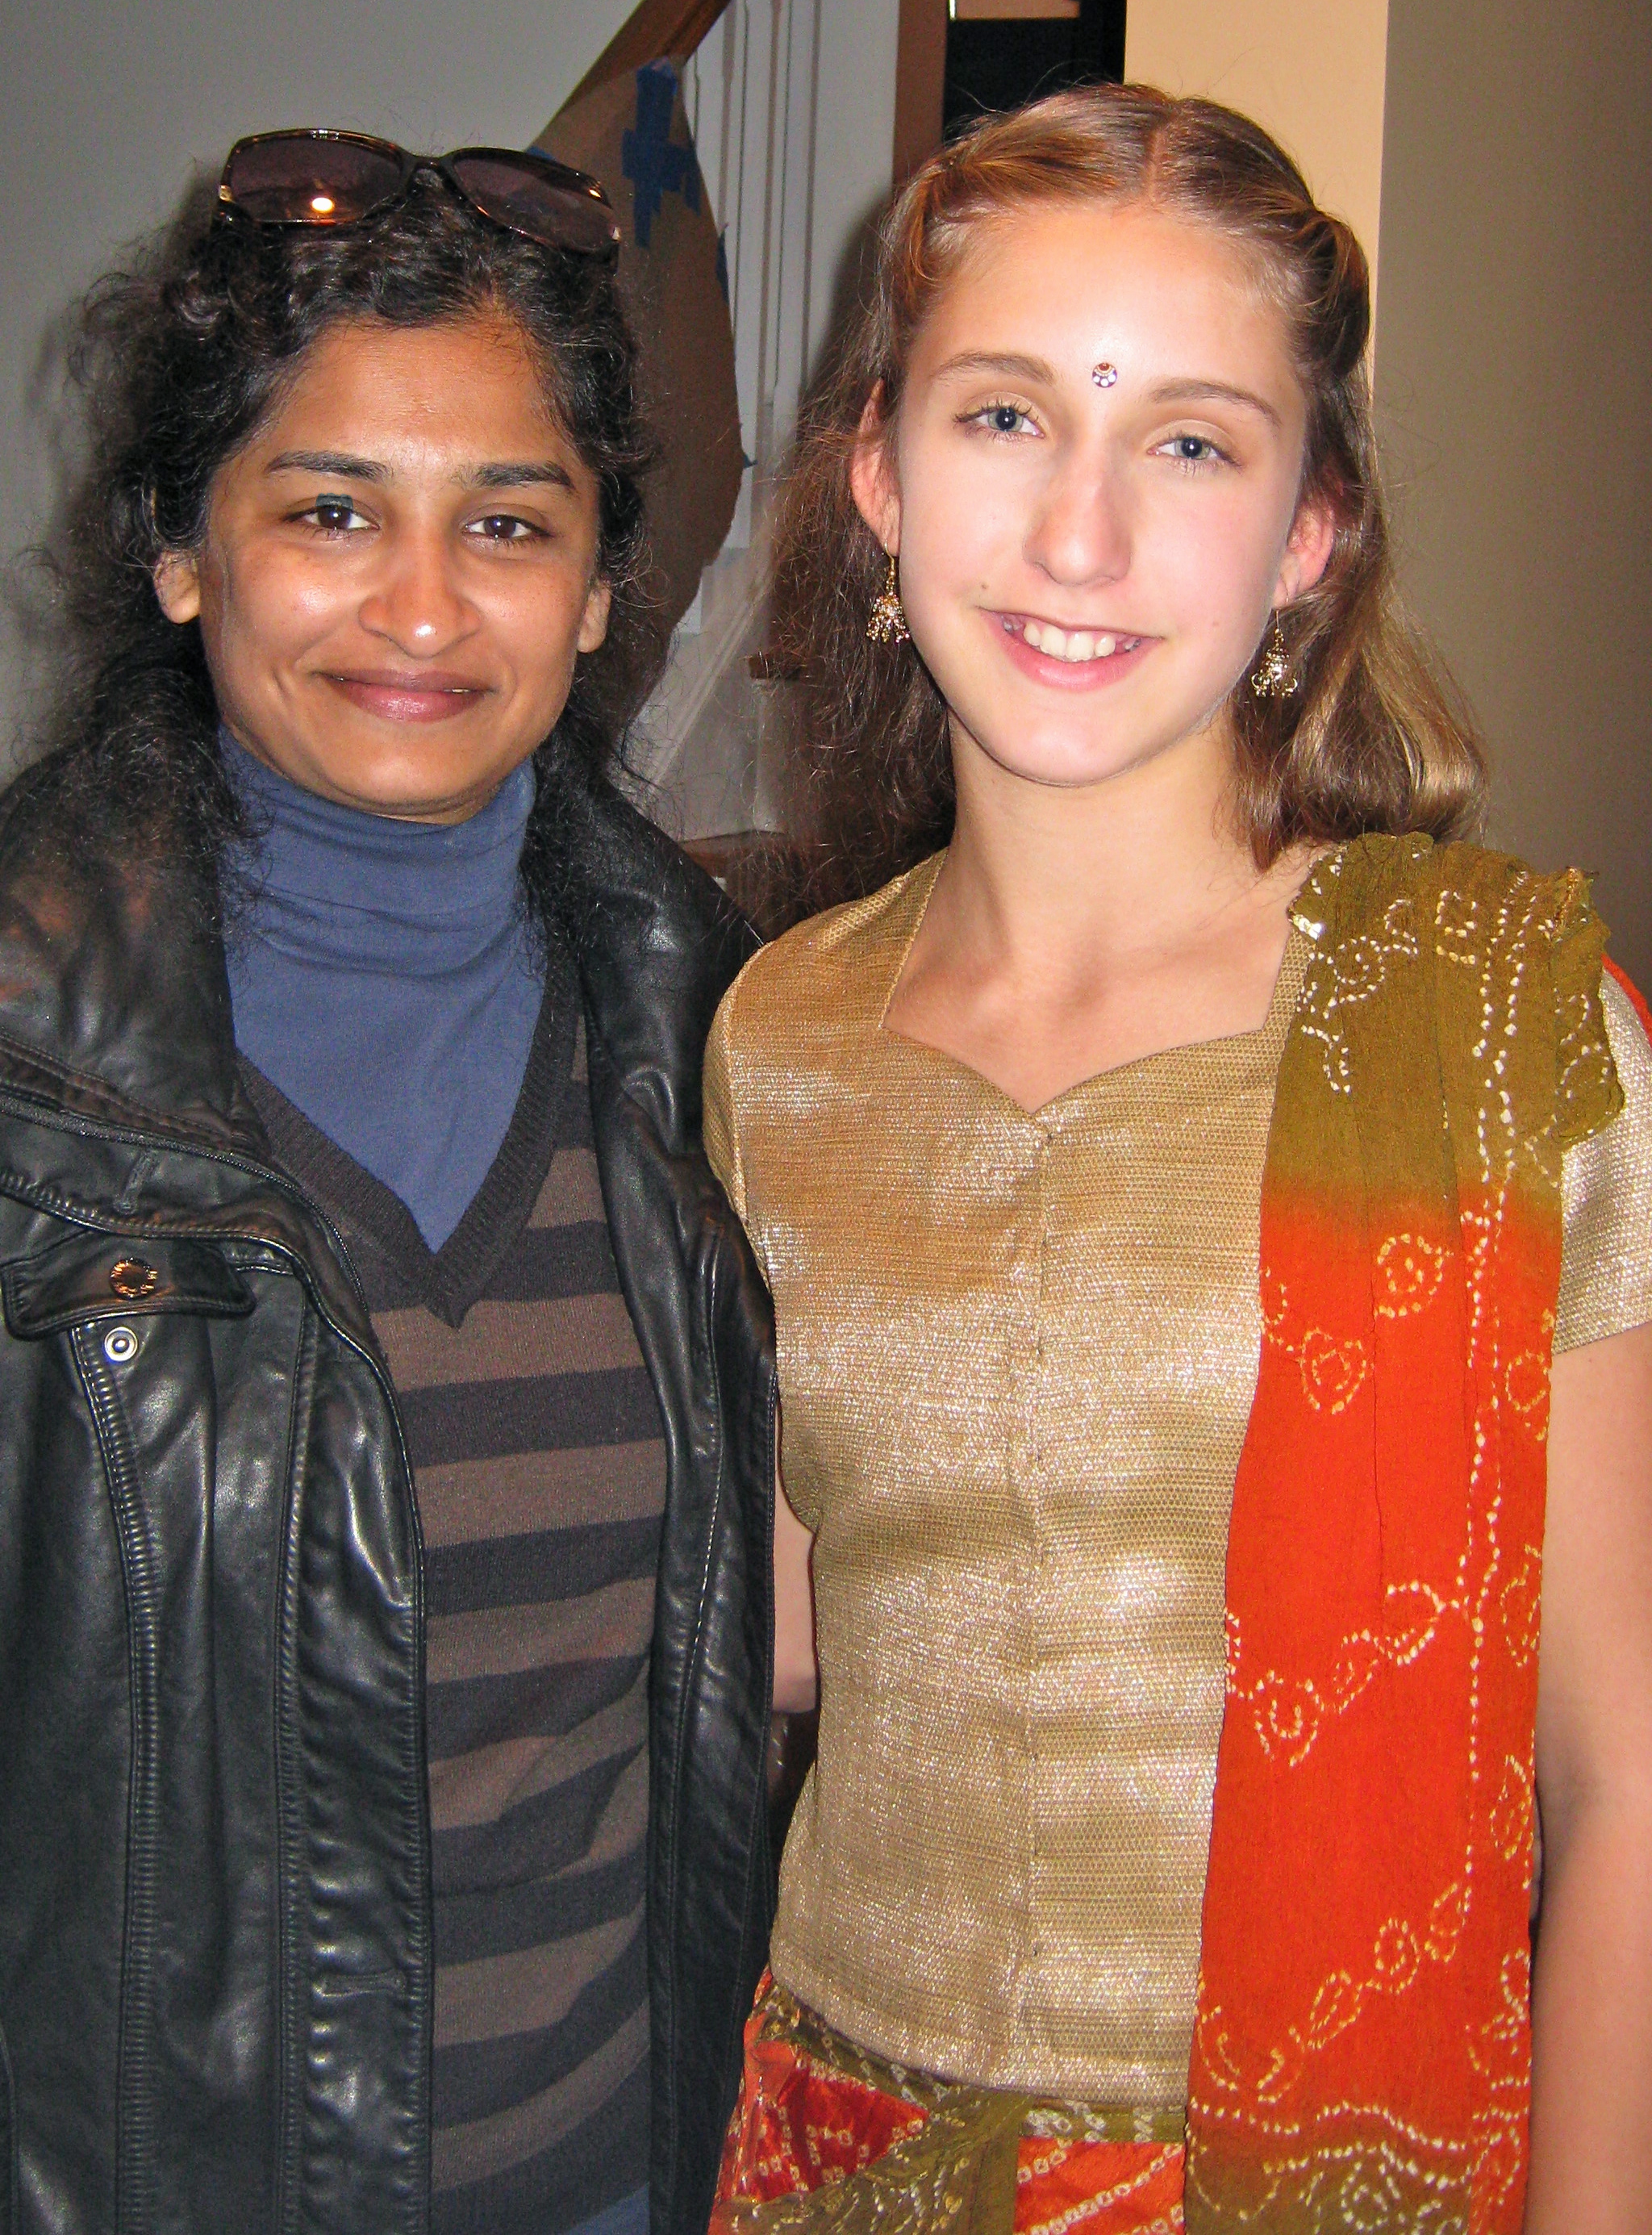 Carina with Director: Gauri Shinde - on set of English Vinglish.